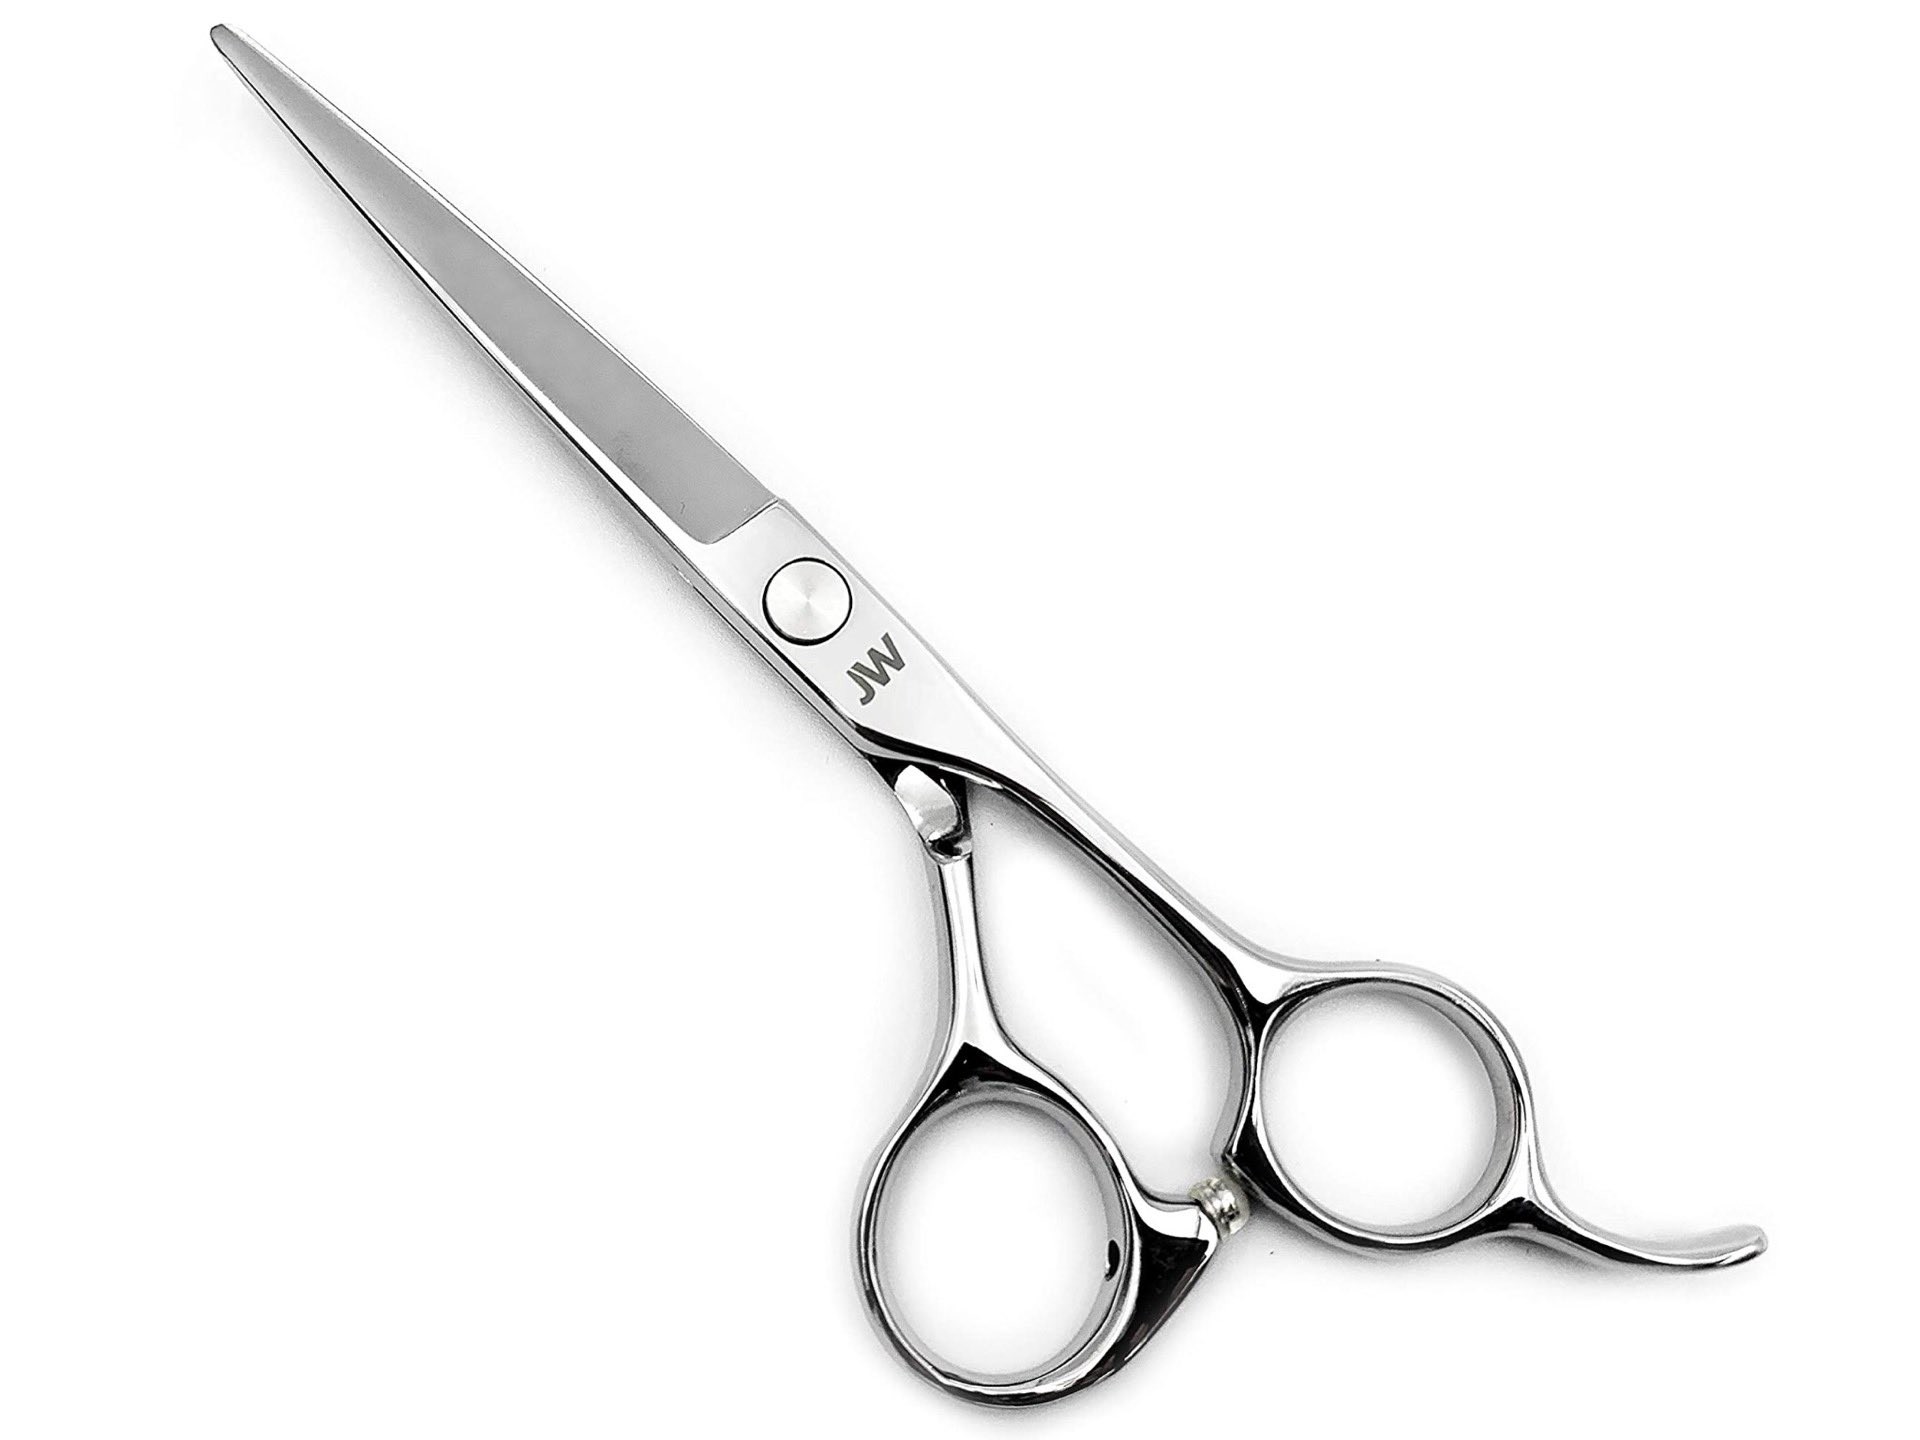 jw-shears-professional-hair-cutting-scissors